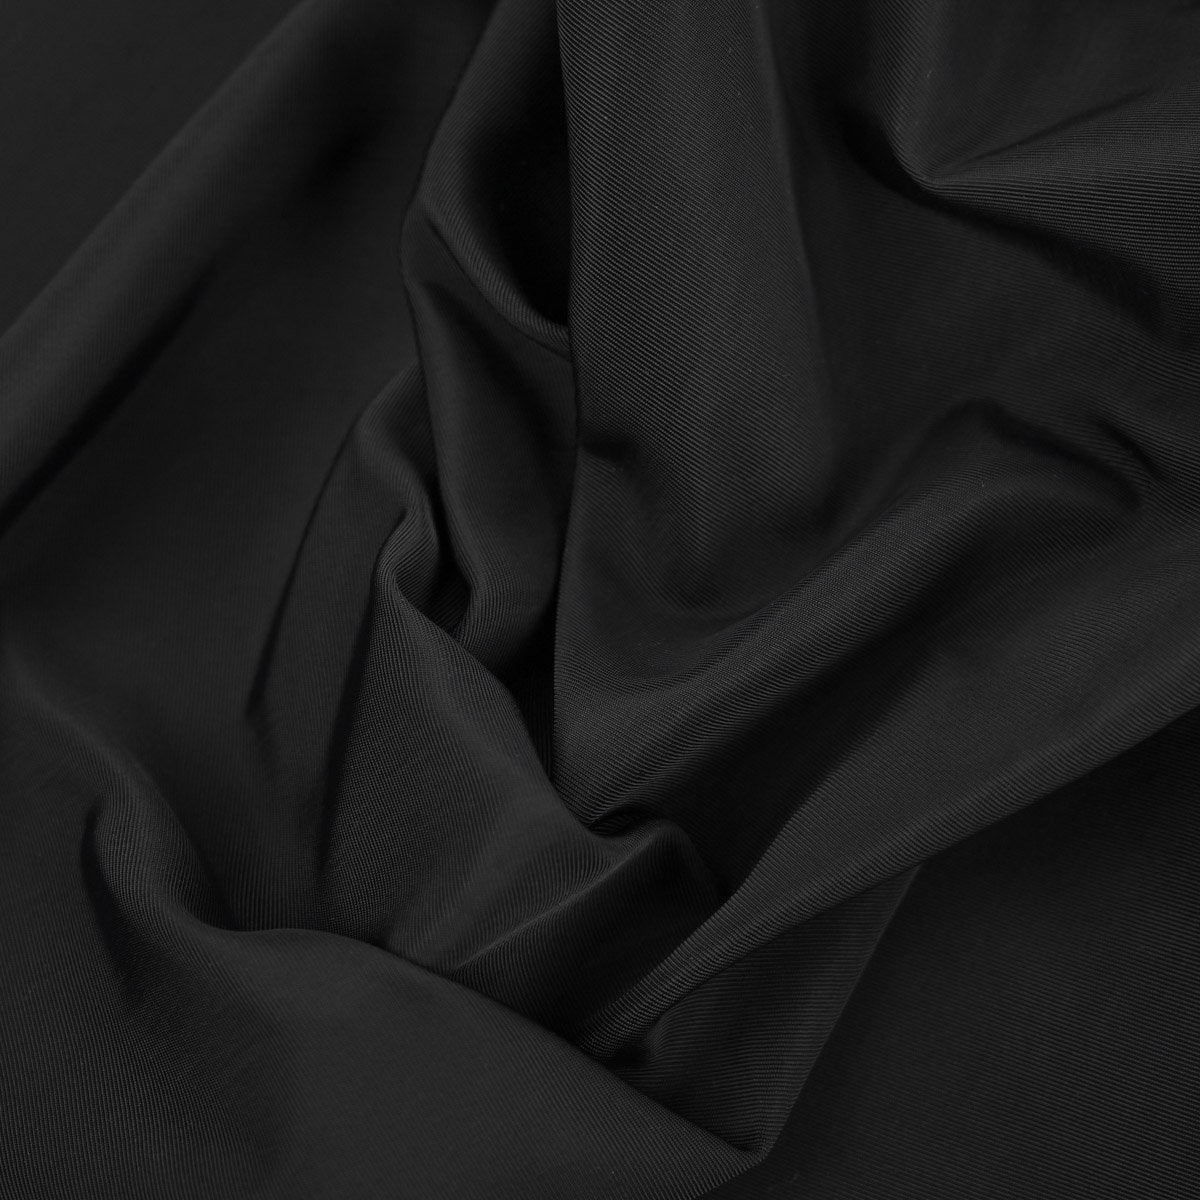 Black Grosgrain Fabric 96406